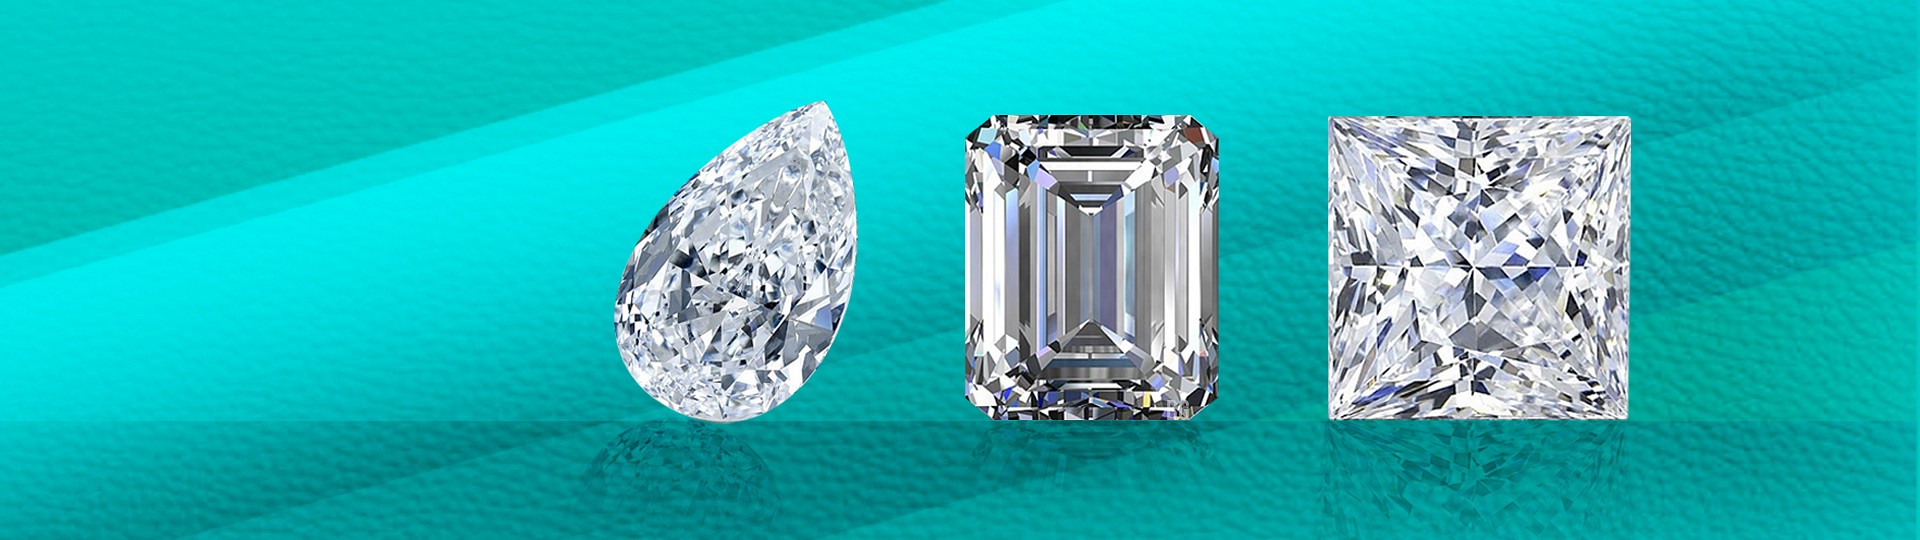 NO RESERVE LOTS - 100% Natural Diamonds | Day 2 by Bid Global International Auctioneers LLC